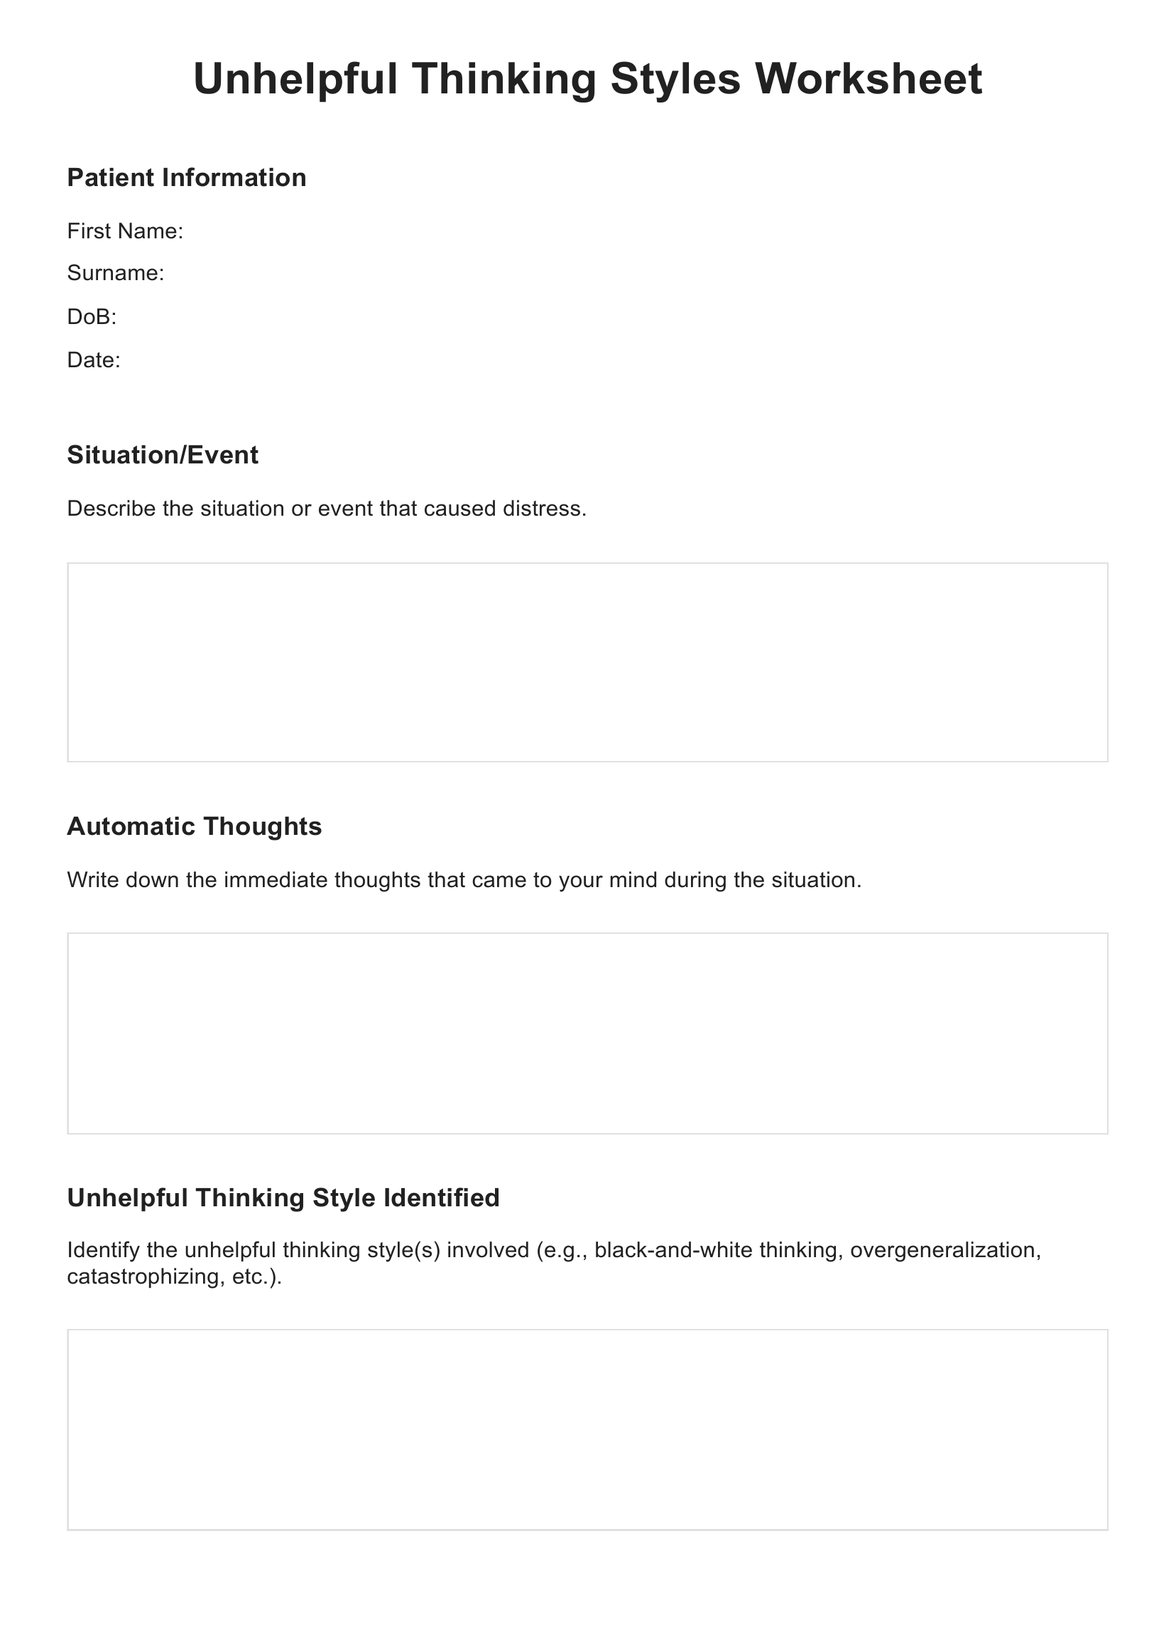 Unhelpful Thinking Styles Worksheet PDF Example